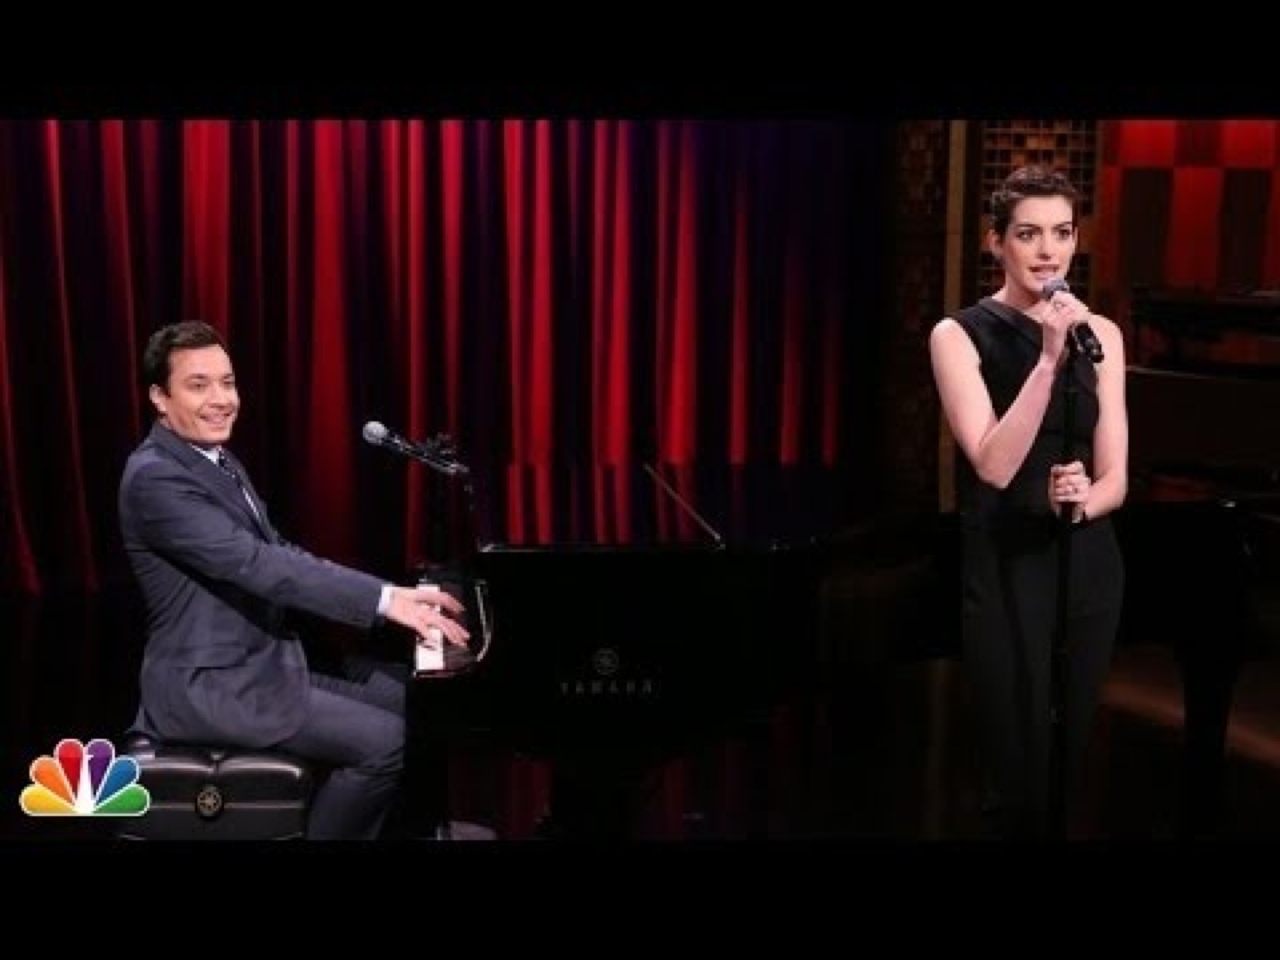 Anne Hathaway Canta Hip Hop no Programa do Jimmy Fallon